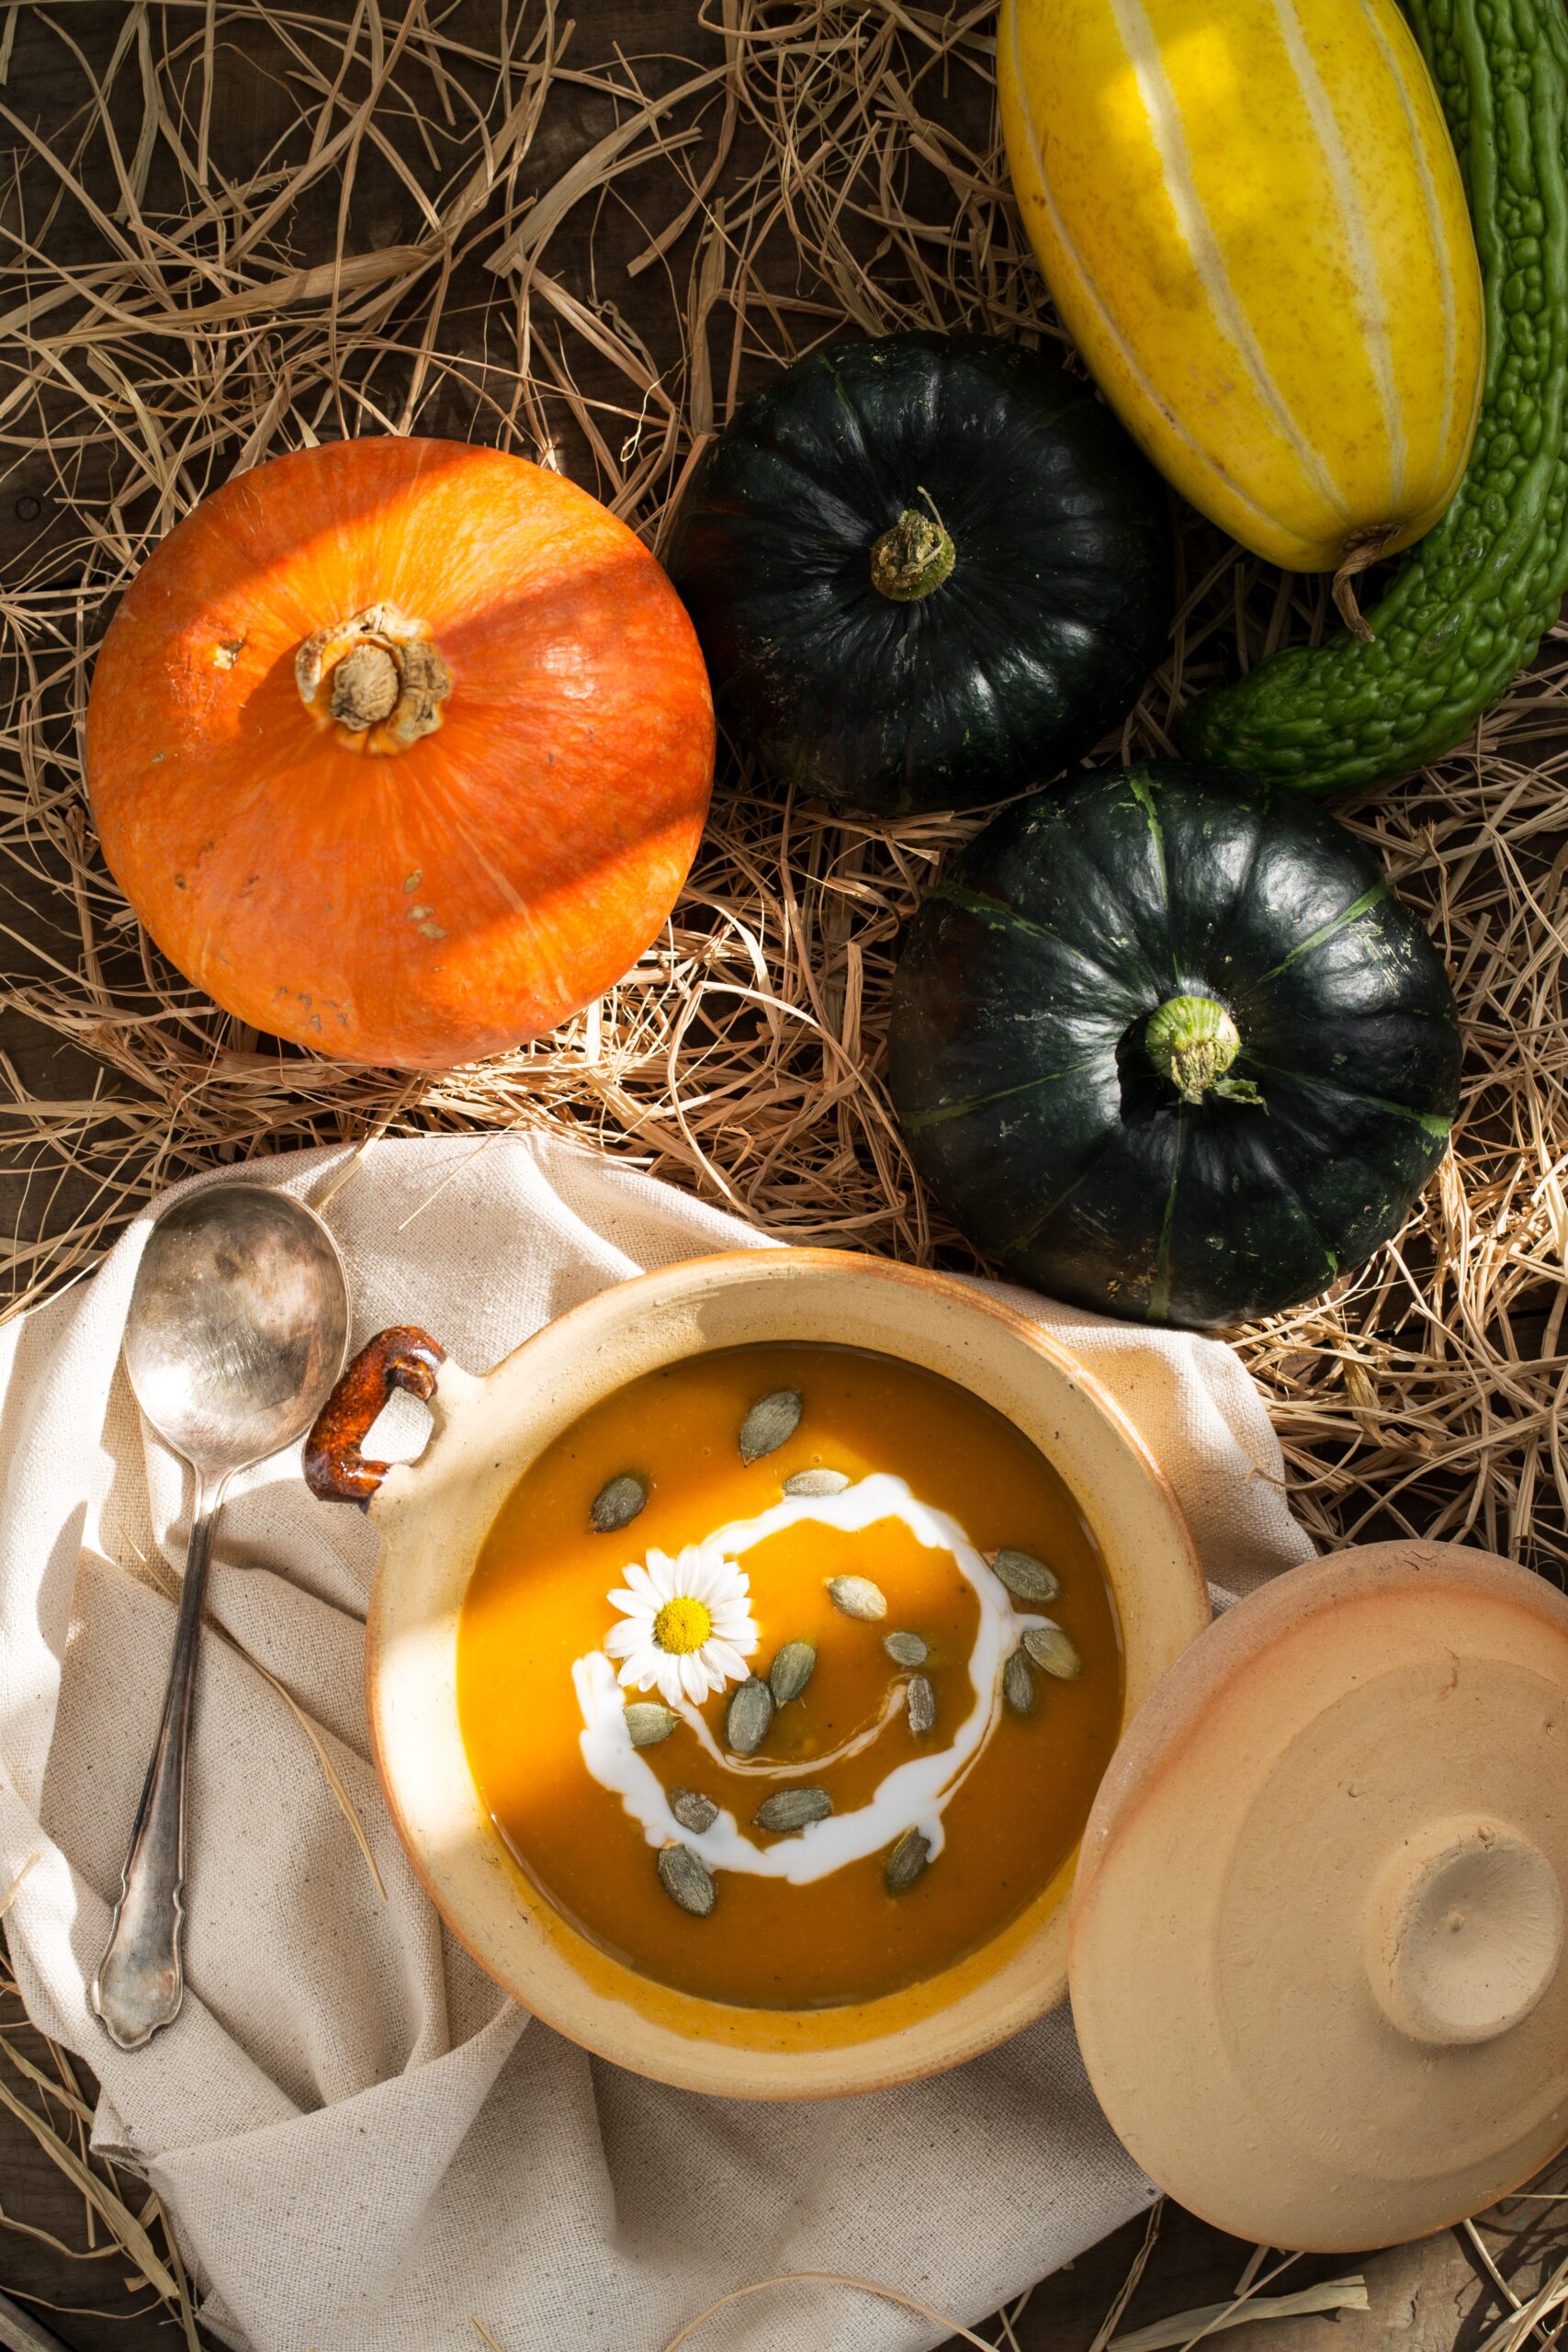 Pumpkin soup and pumpkins